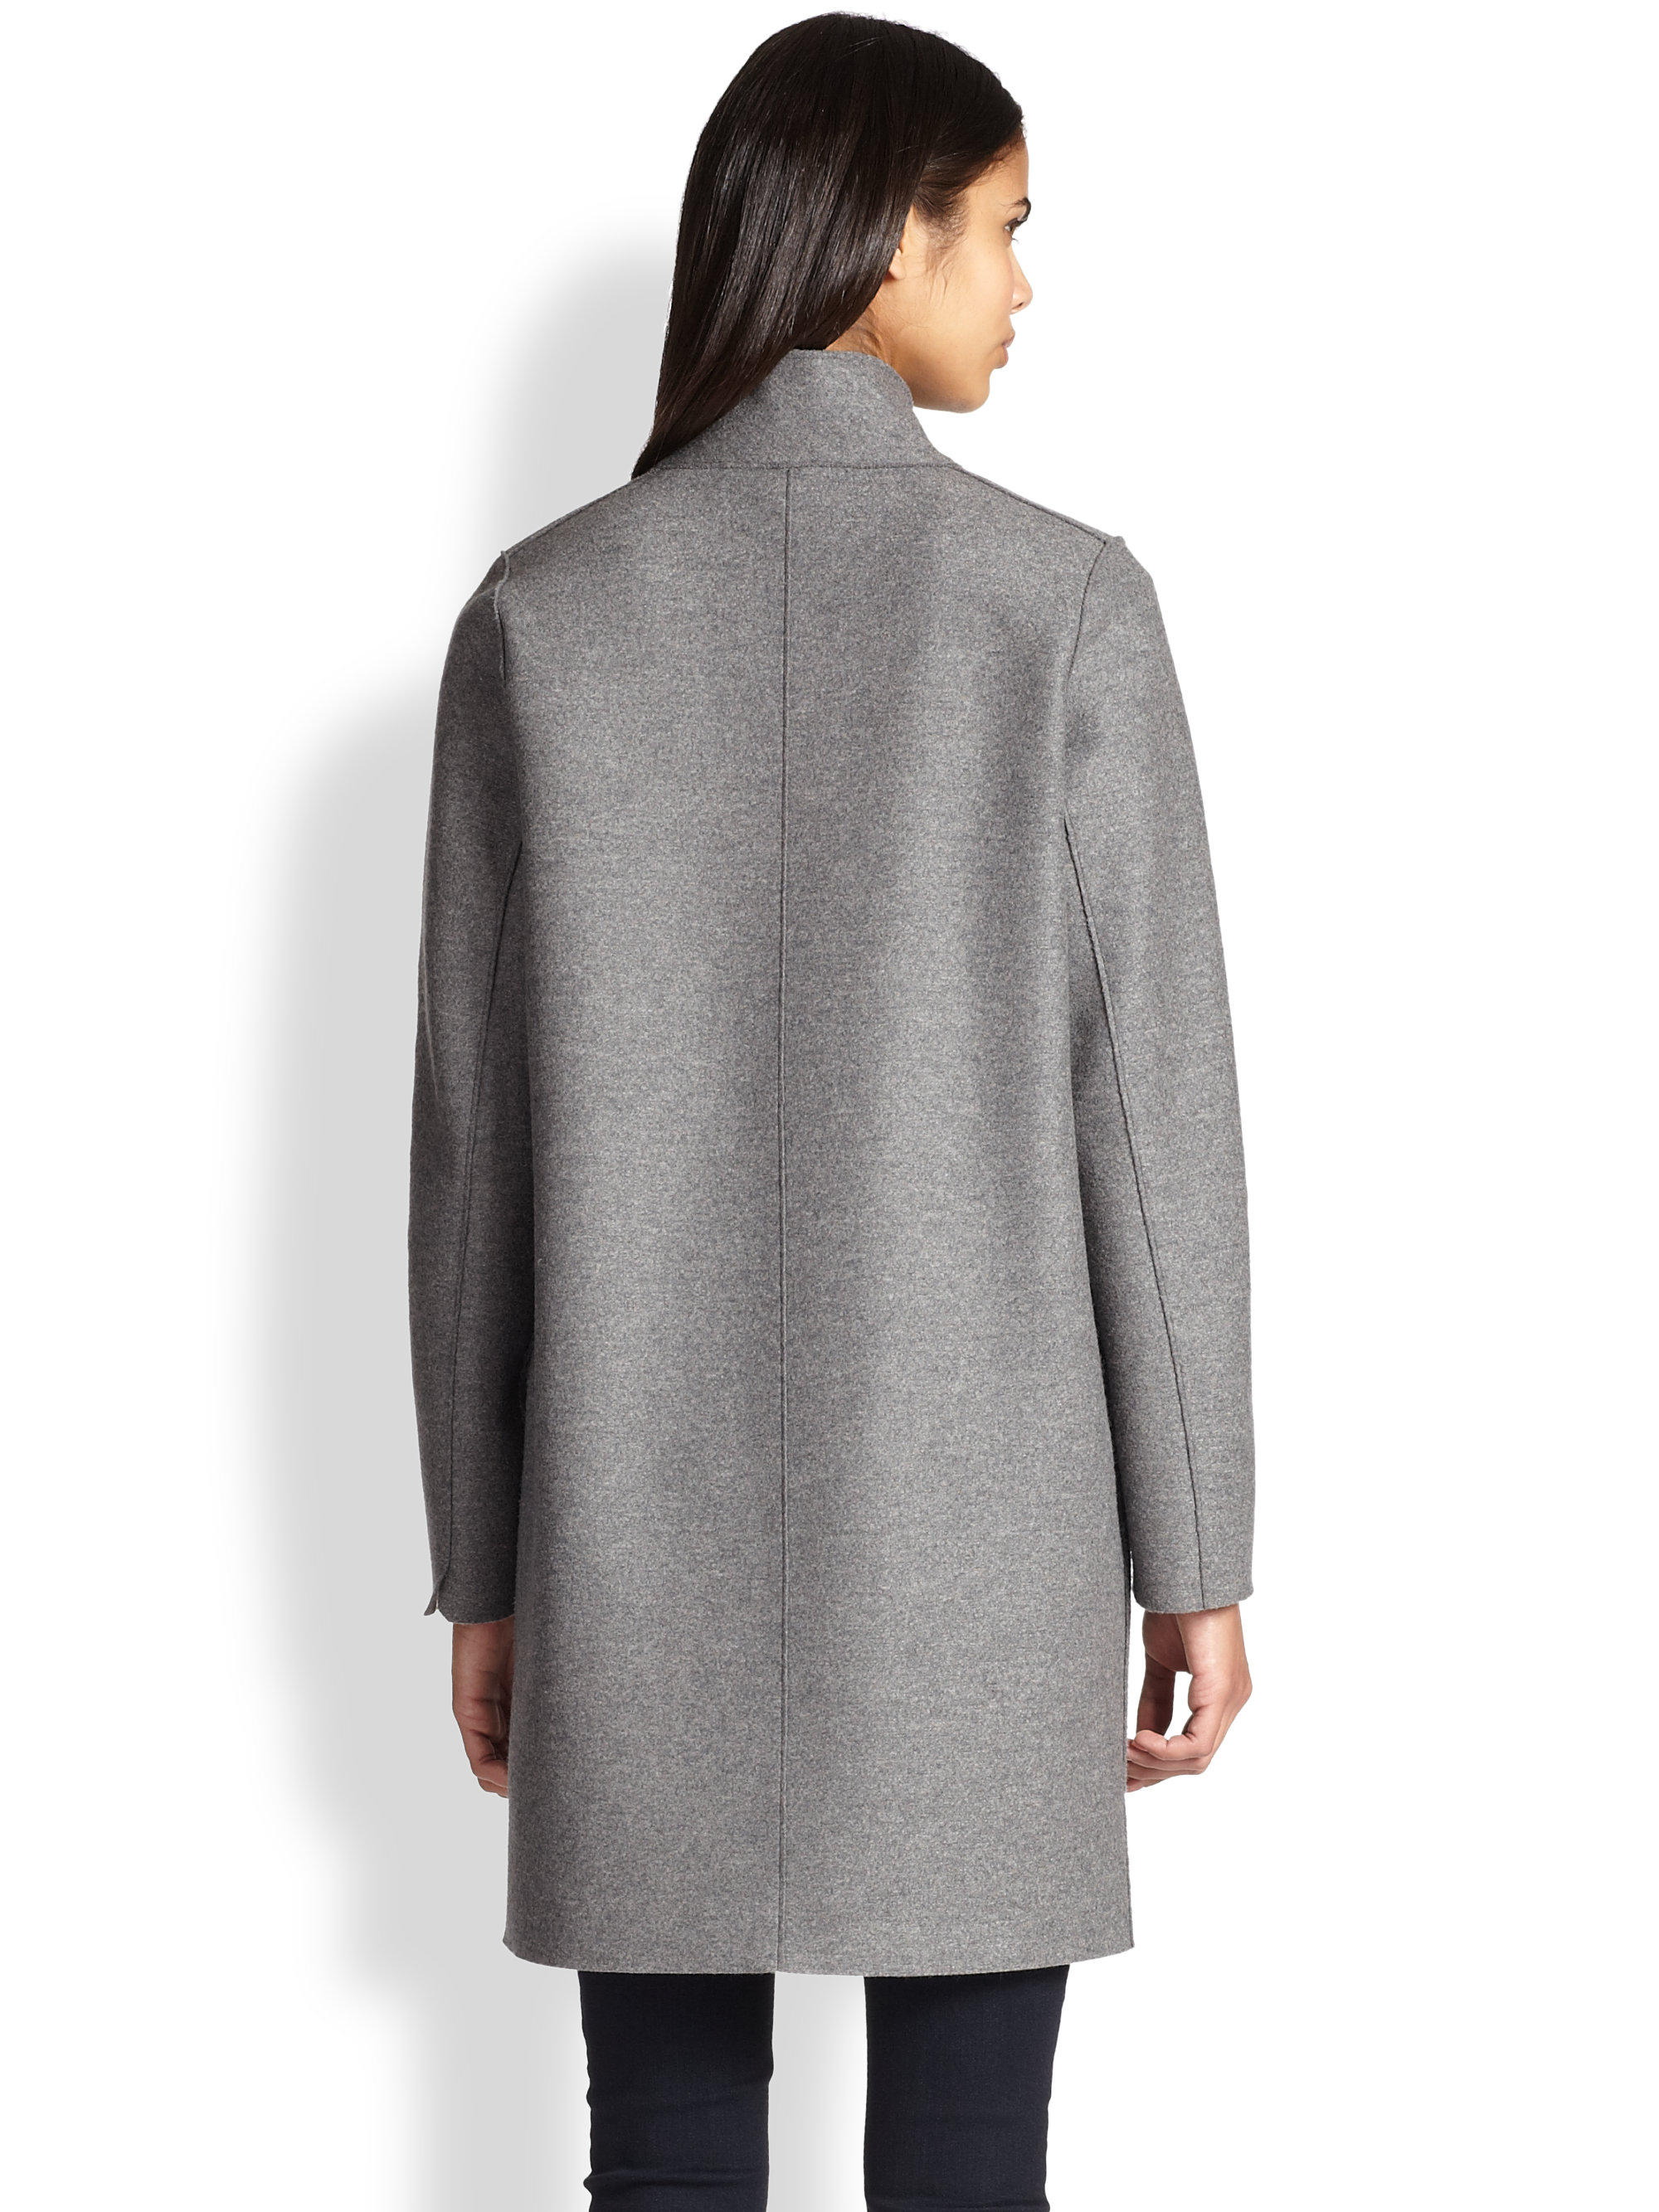 Lyst - Harris Wharf London Wool Coat in Gray